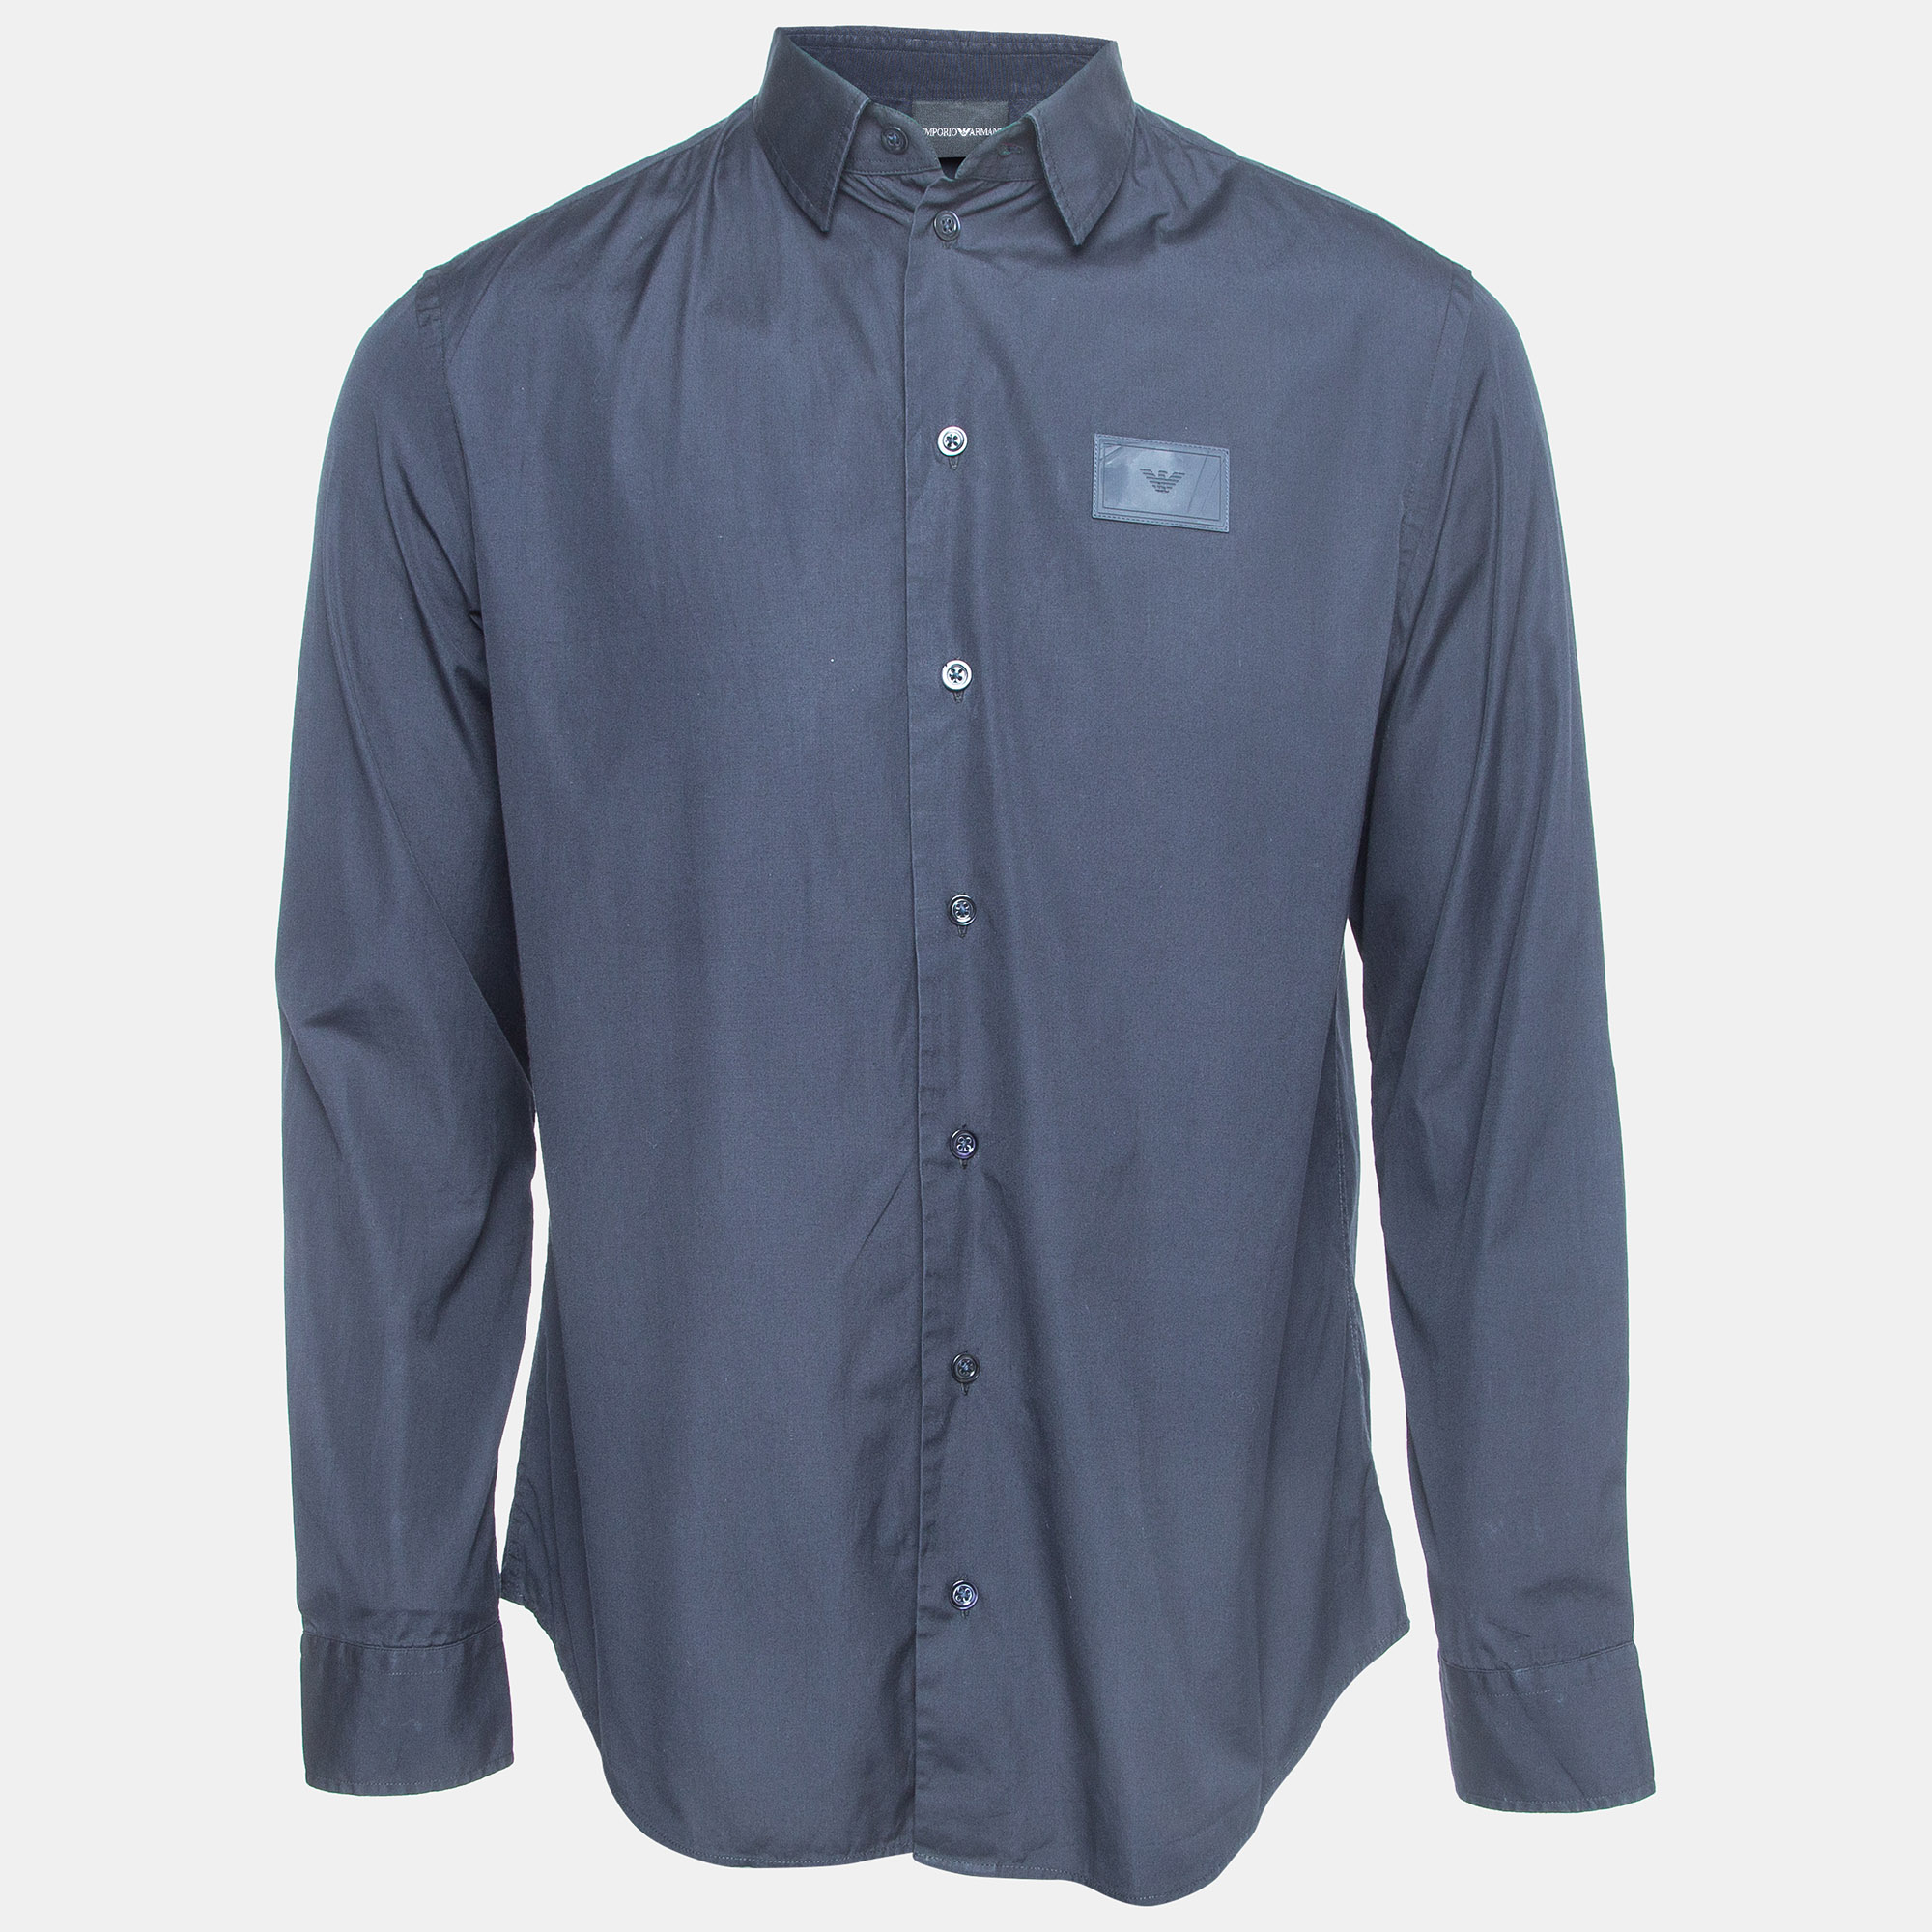 Emporio Armani Navy Blue Cotton Button Front Full Sleeve Shirt M